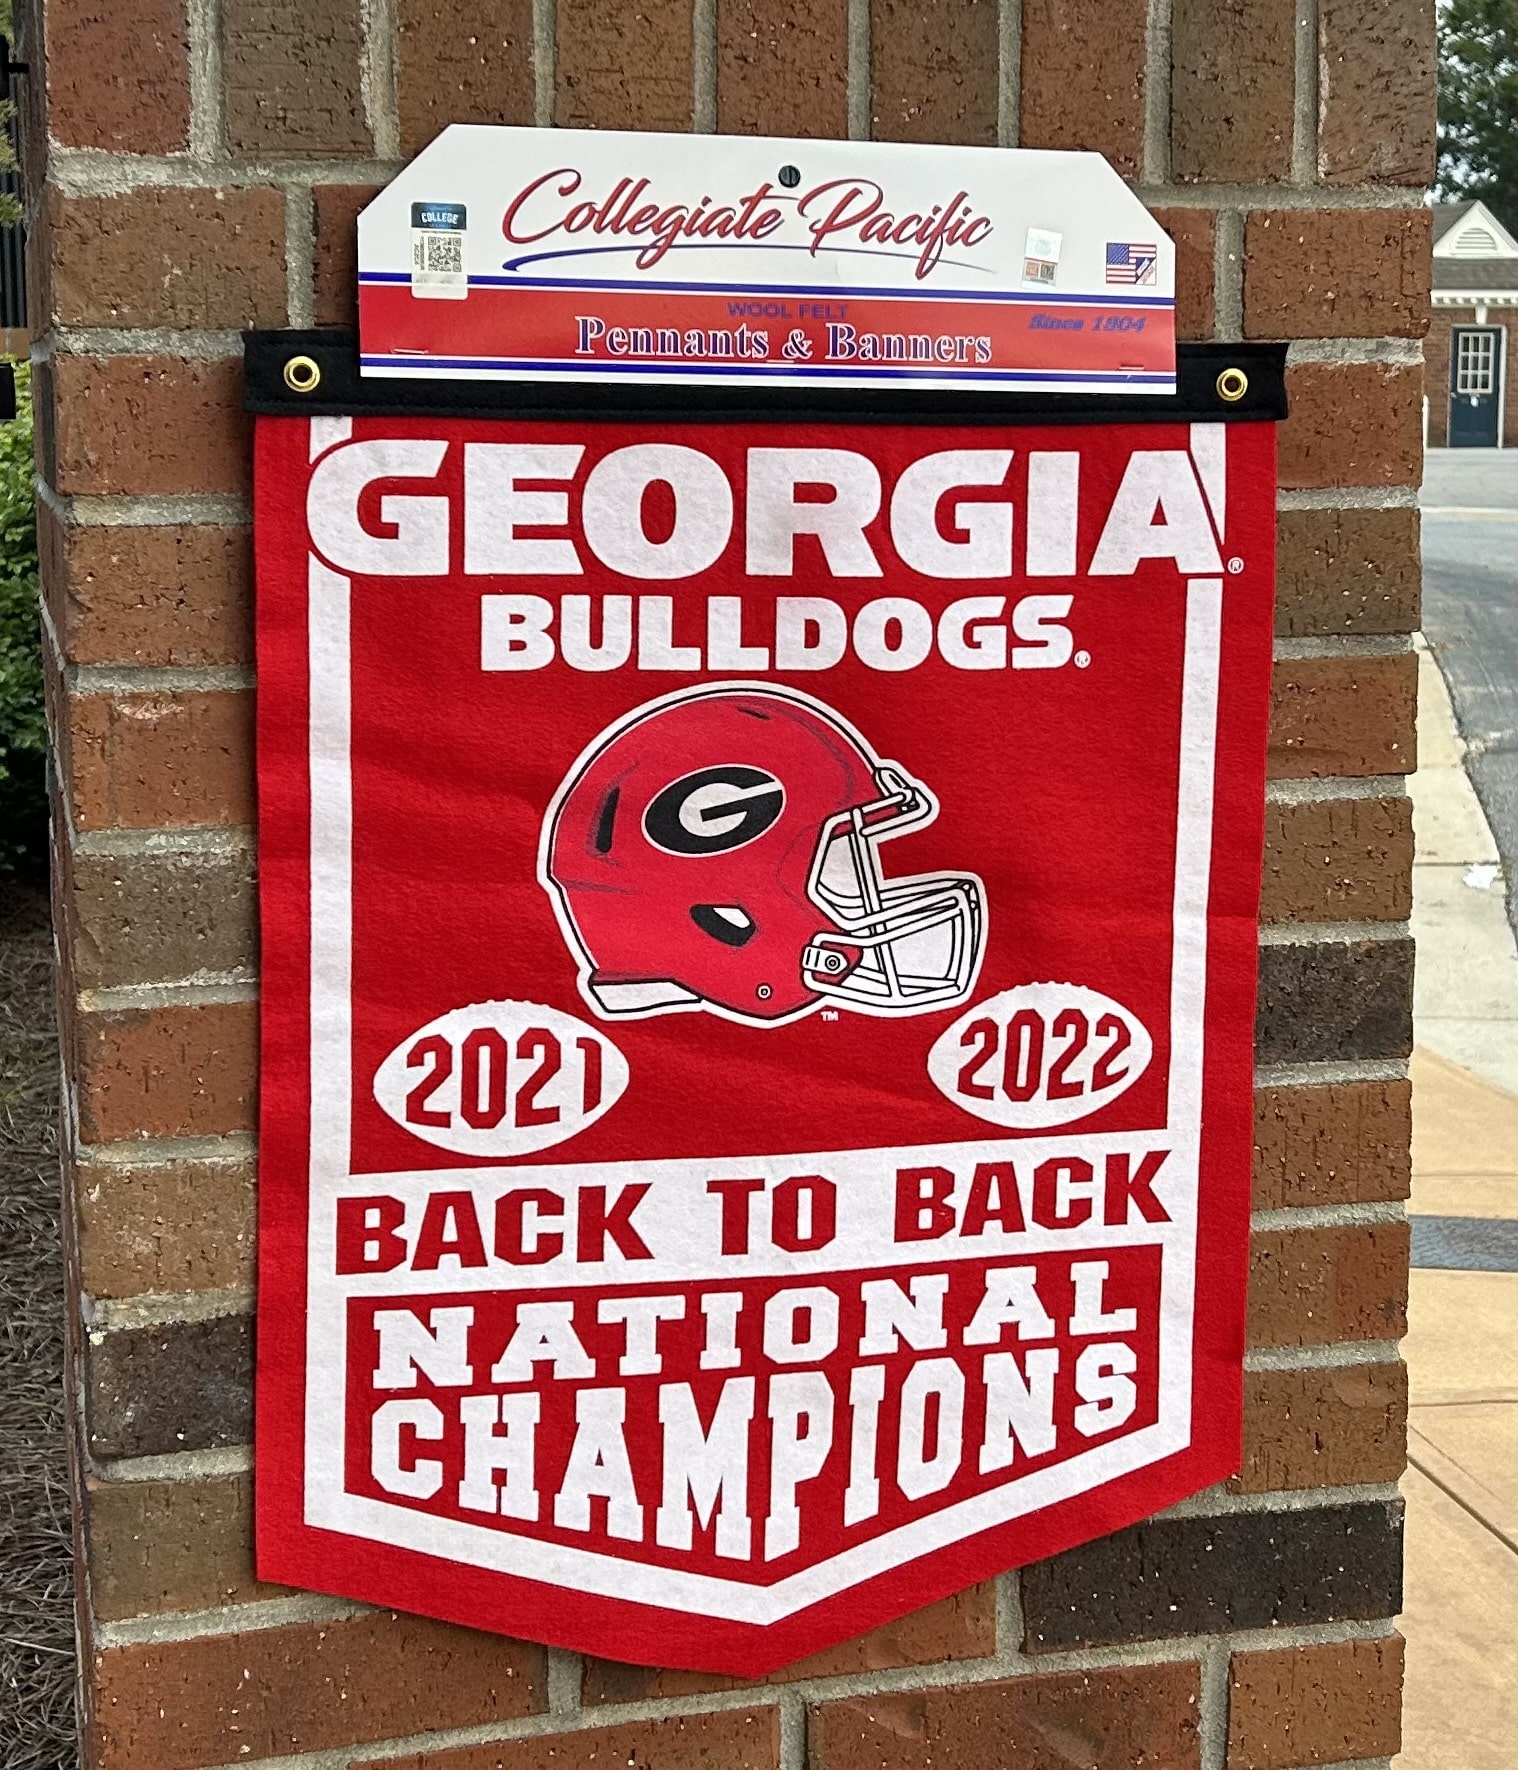 UGA Georgia Bulldogs Braves National Champion 2023 T-Shirt